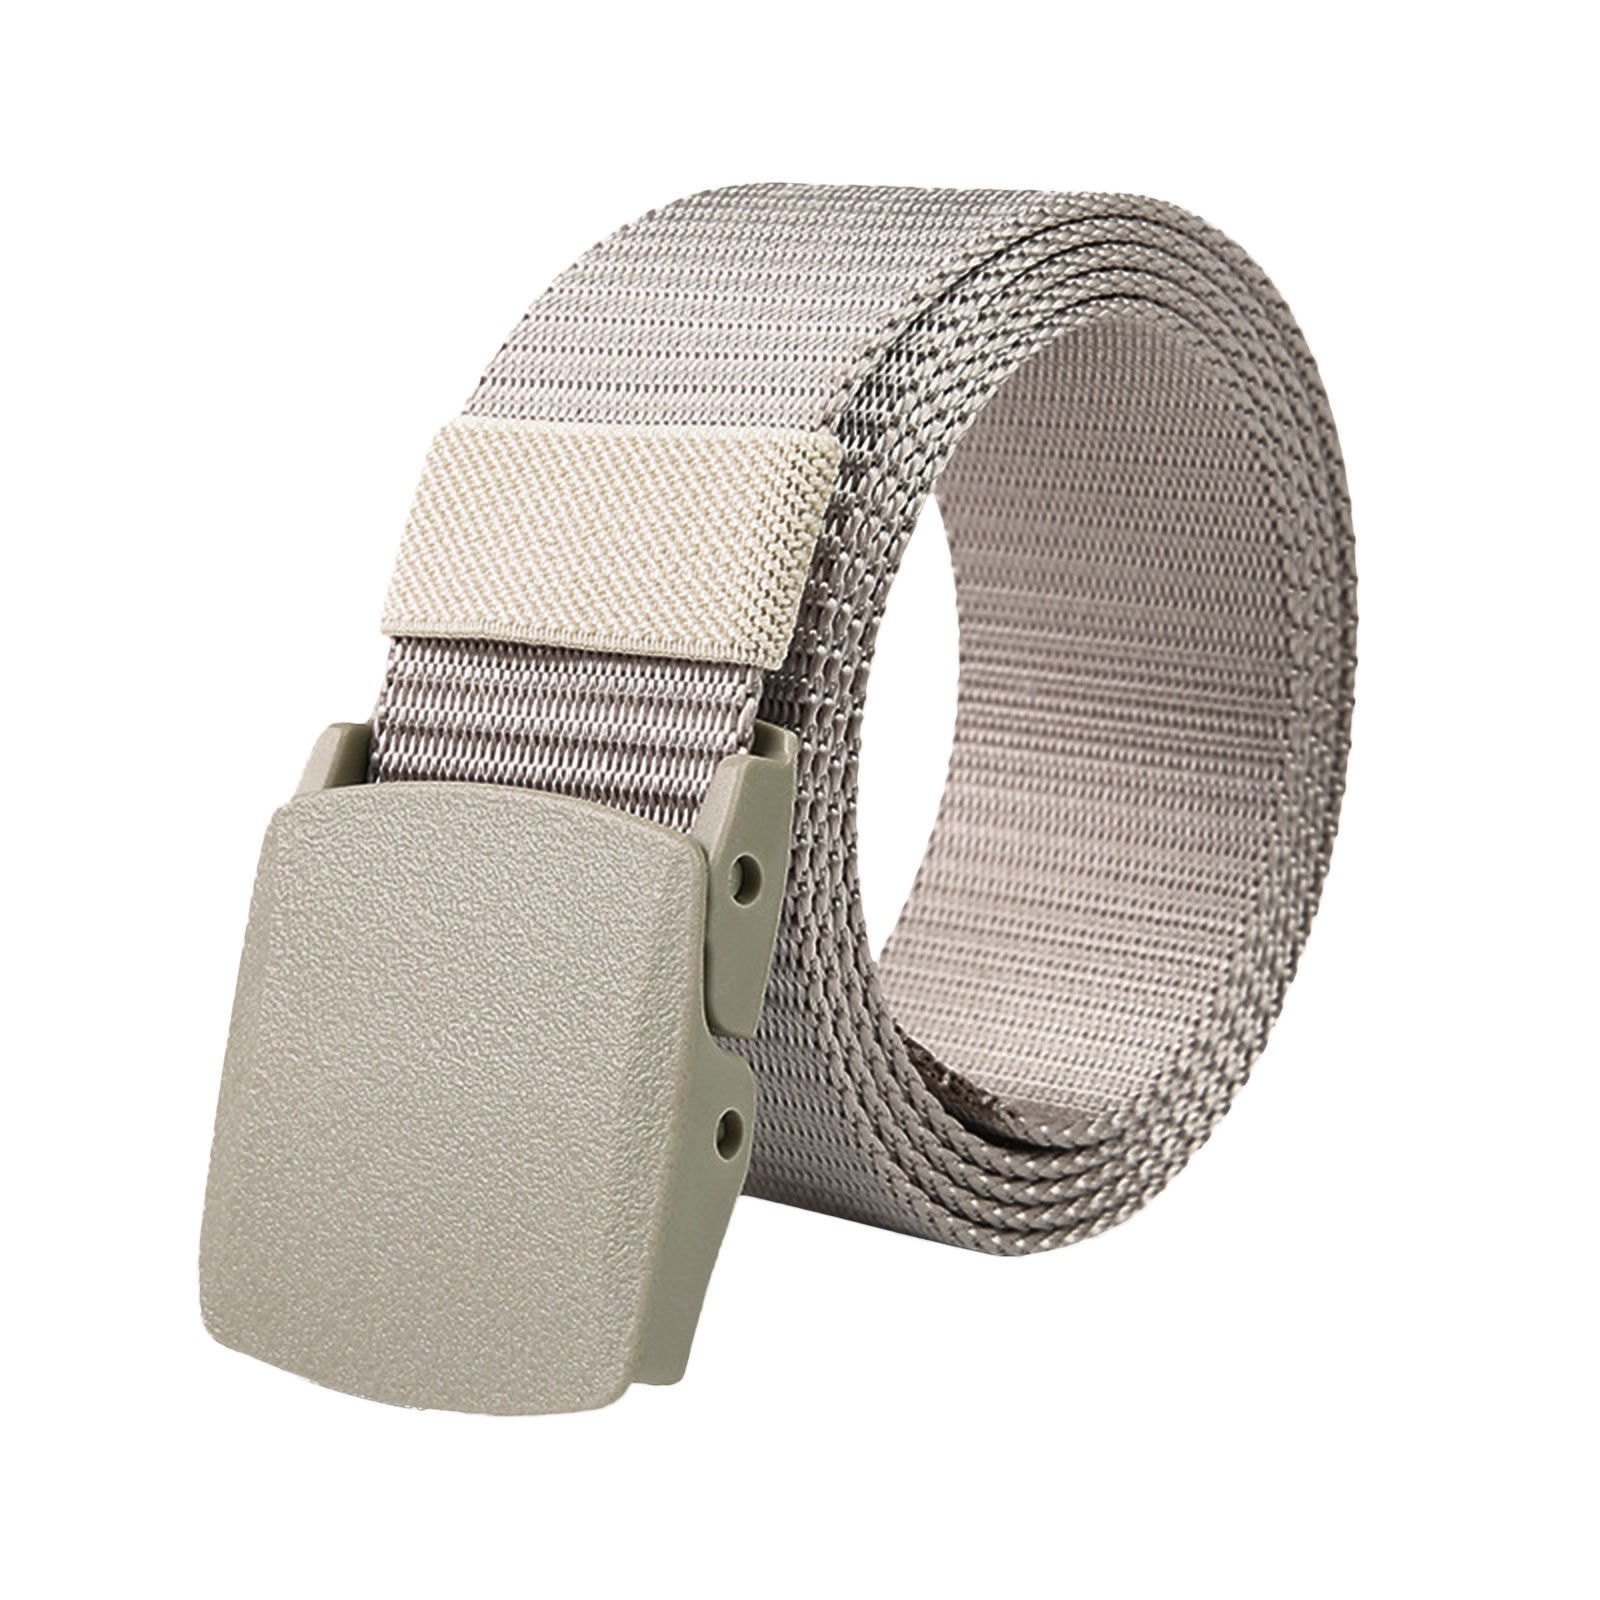 Yubnlvae Belts for Women Mens Adult Unisex Canvas Quick Release Buckle Outer Belt Men's Outdoor Training Belt Belt Beige - image 1 of 3